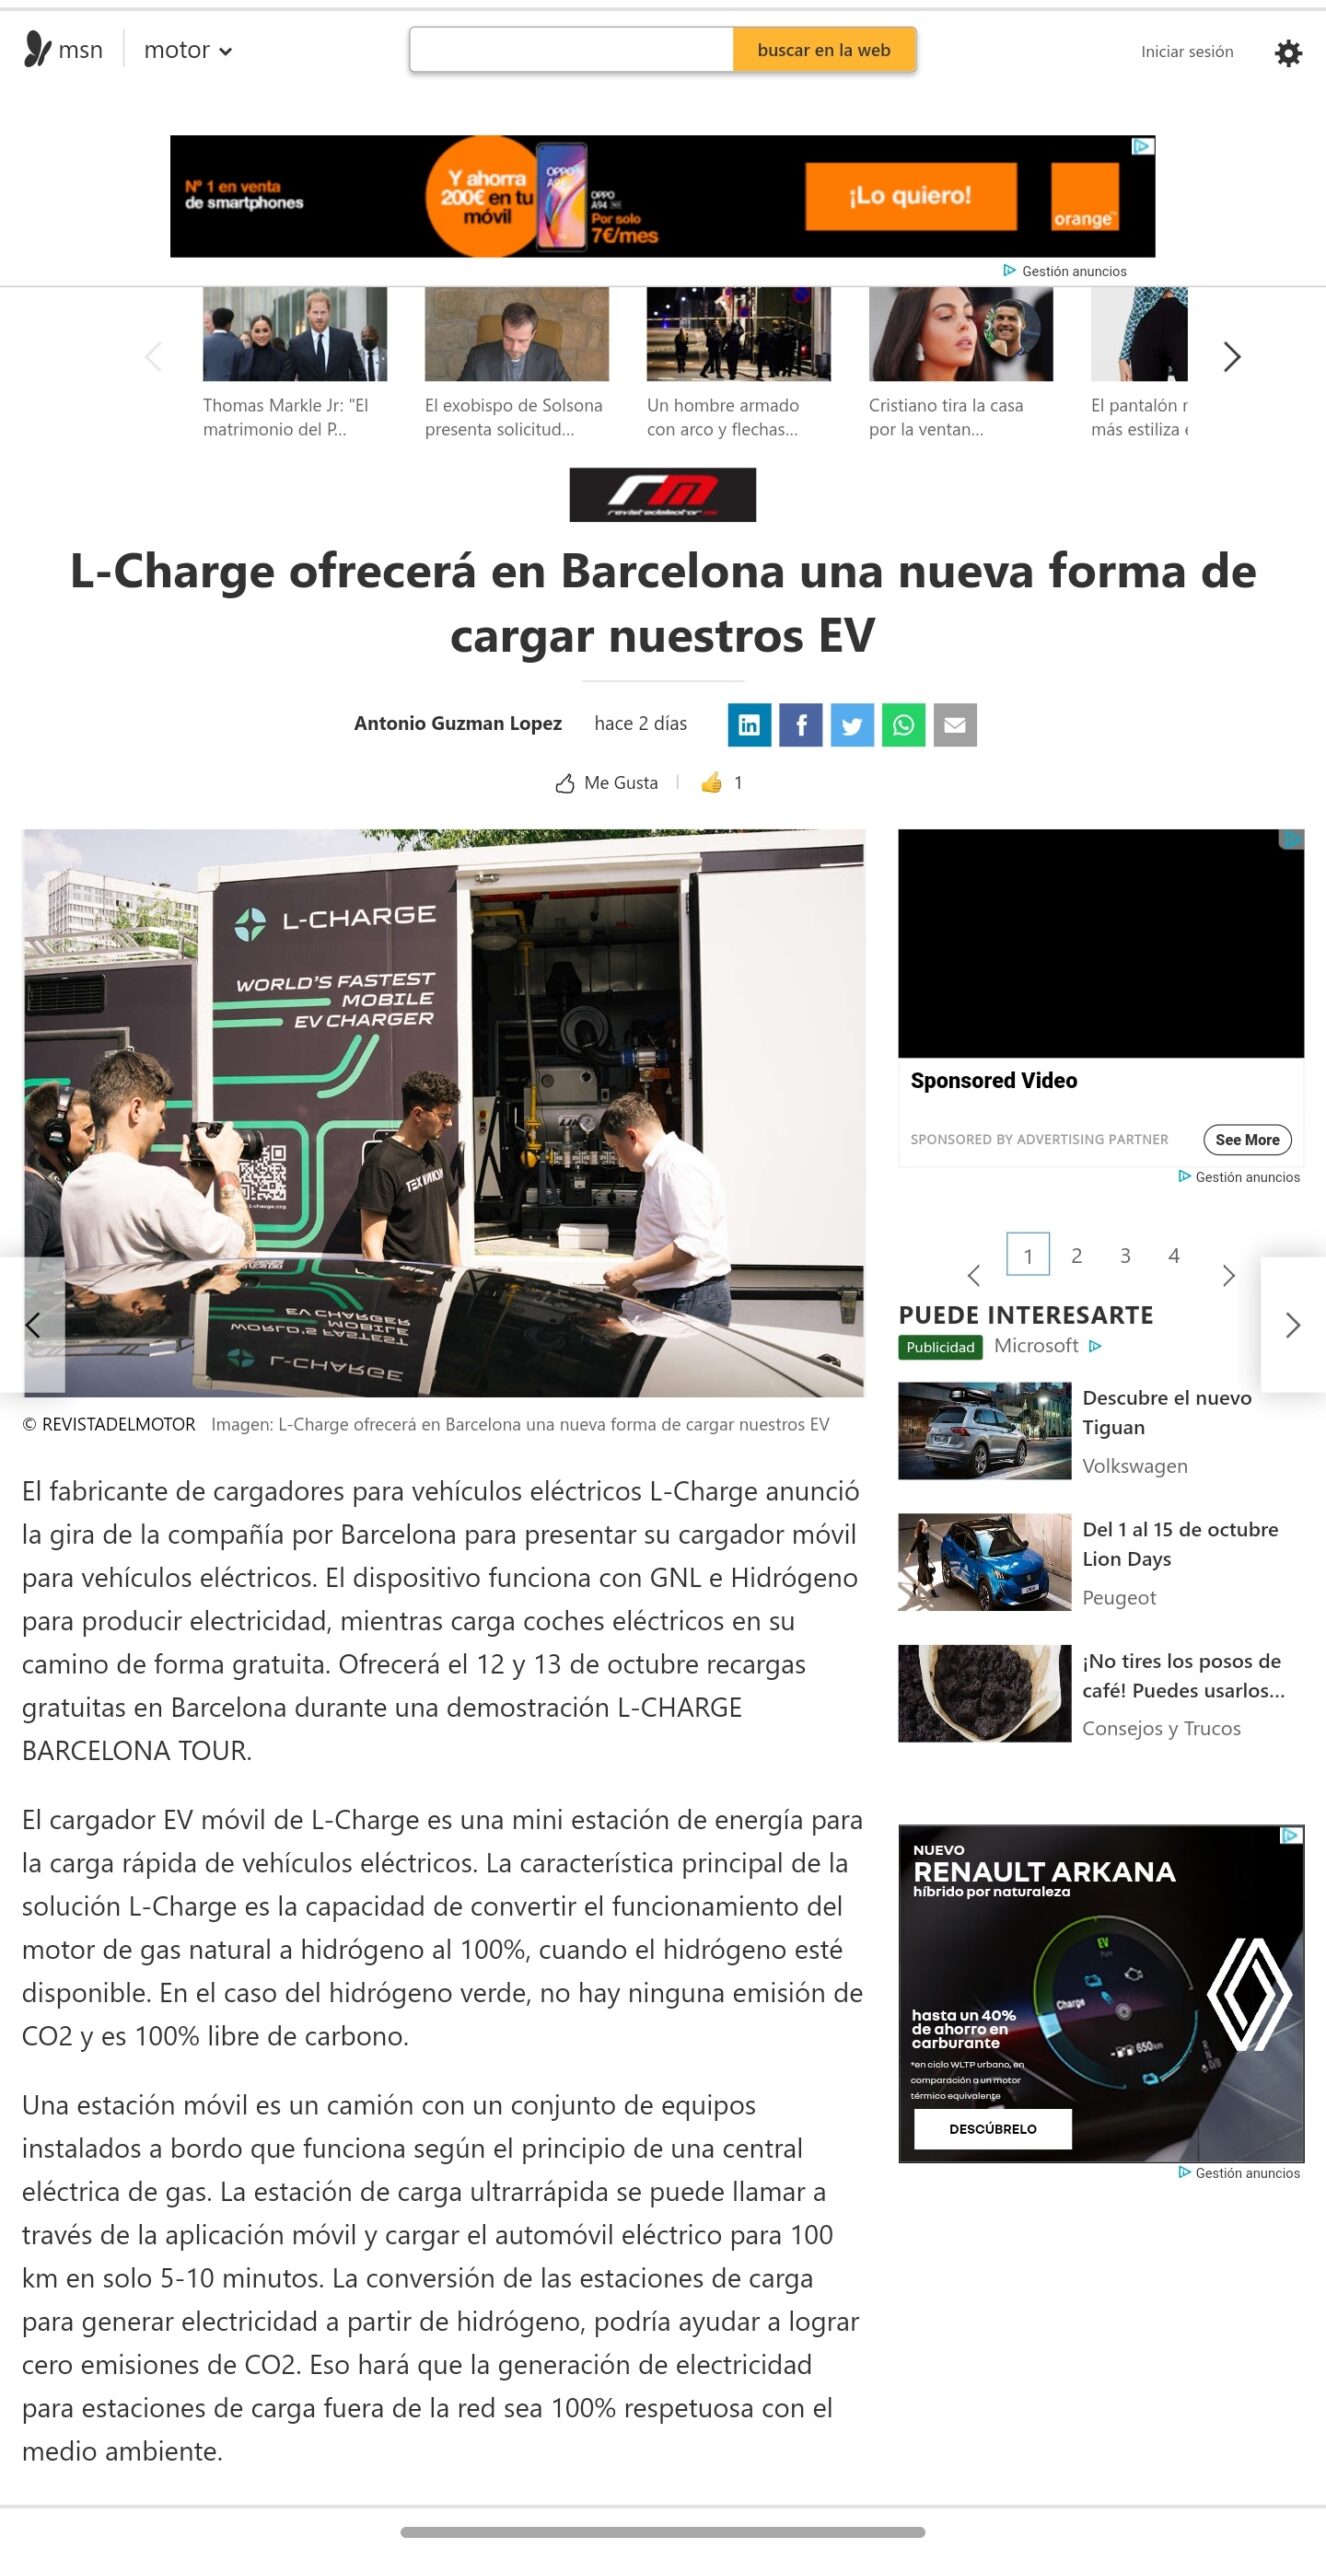 L-Charge Barcelona Tour -MSN Motor